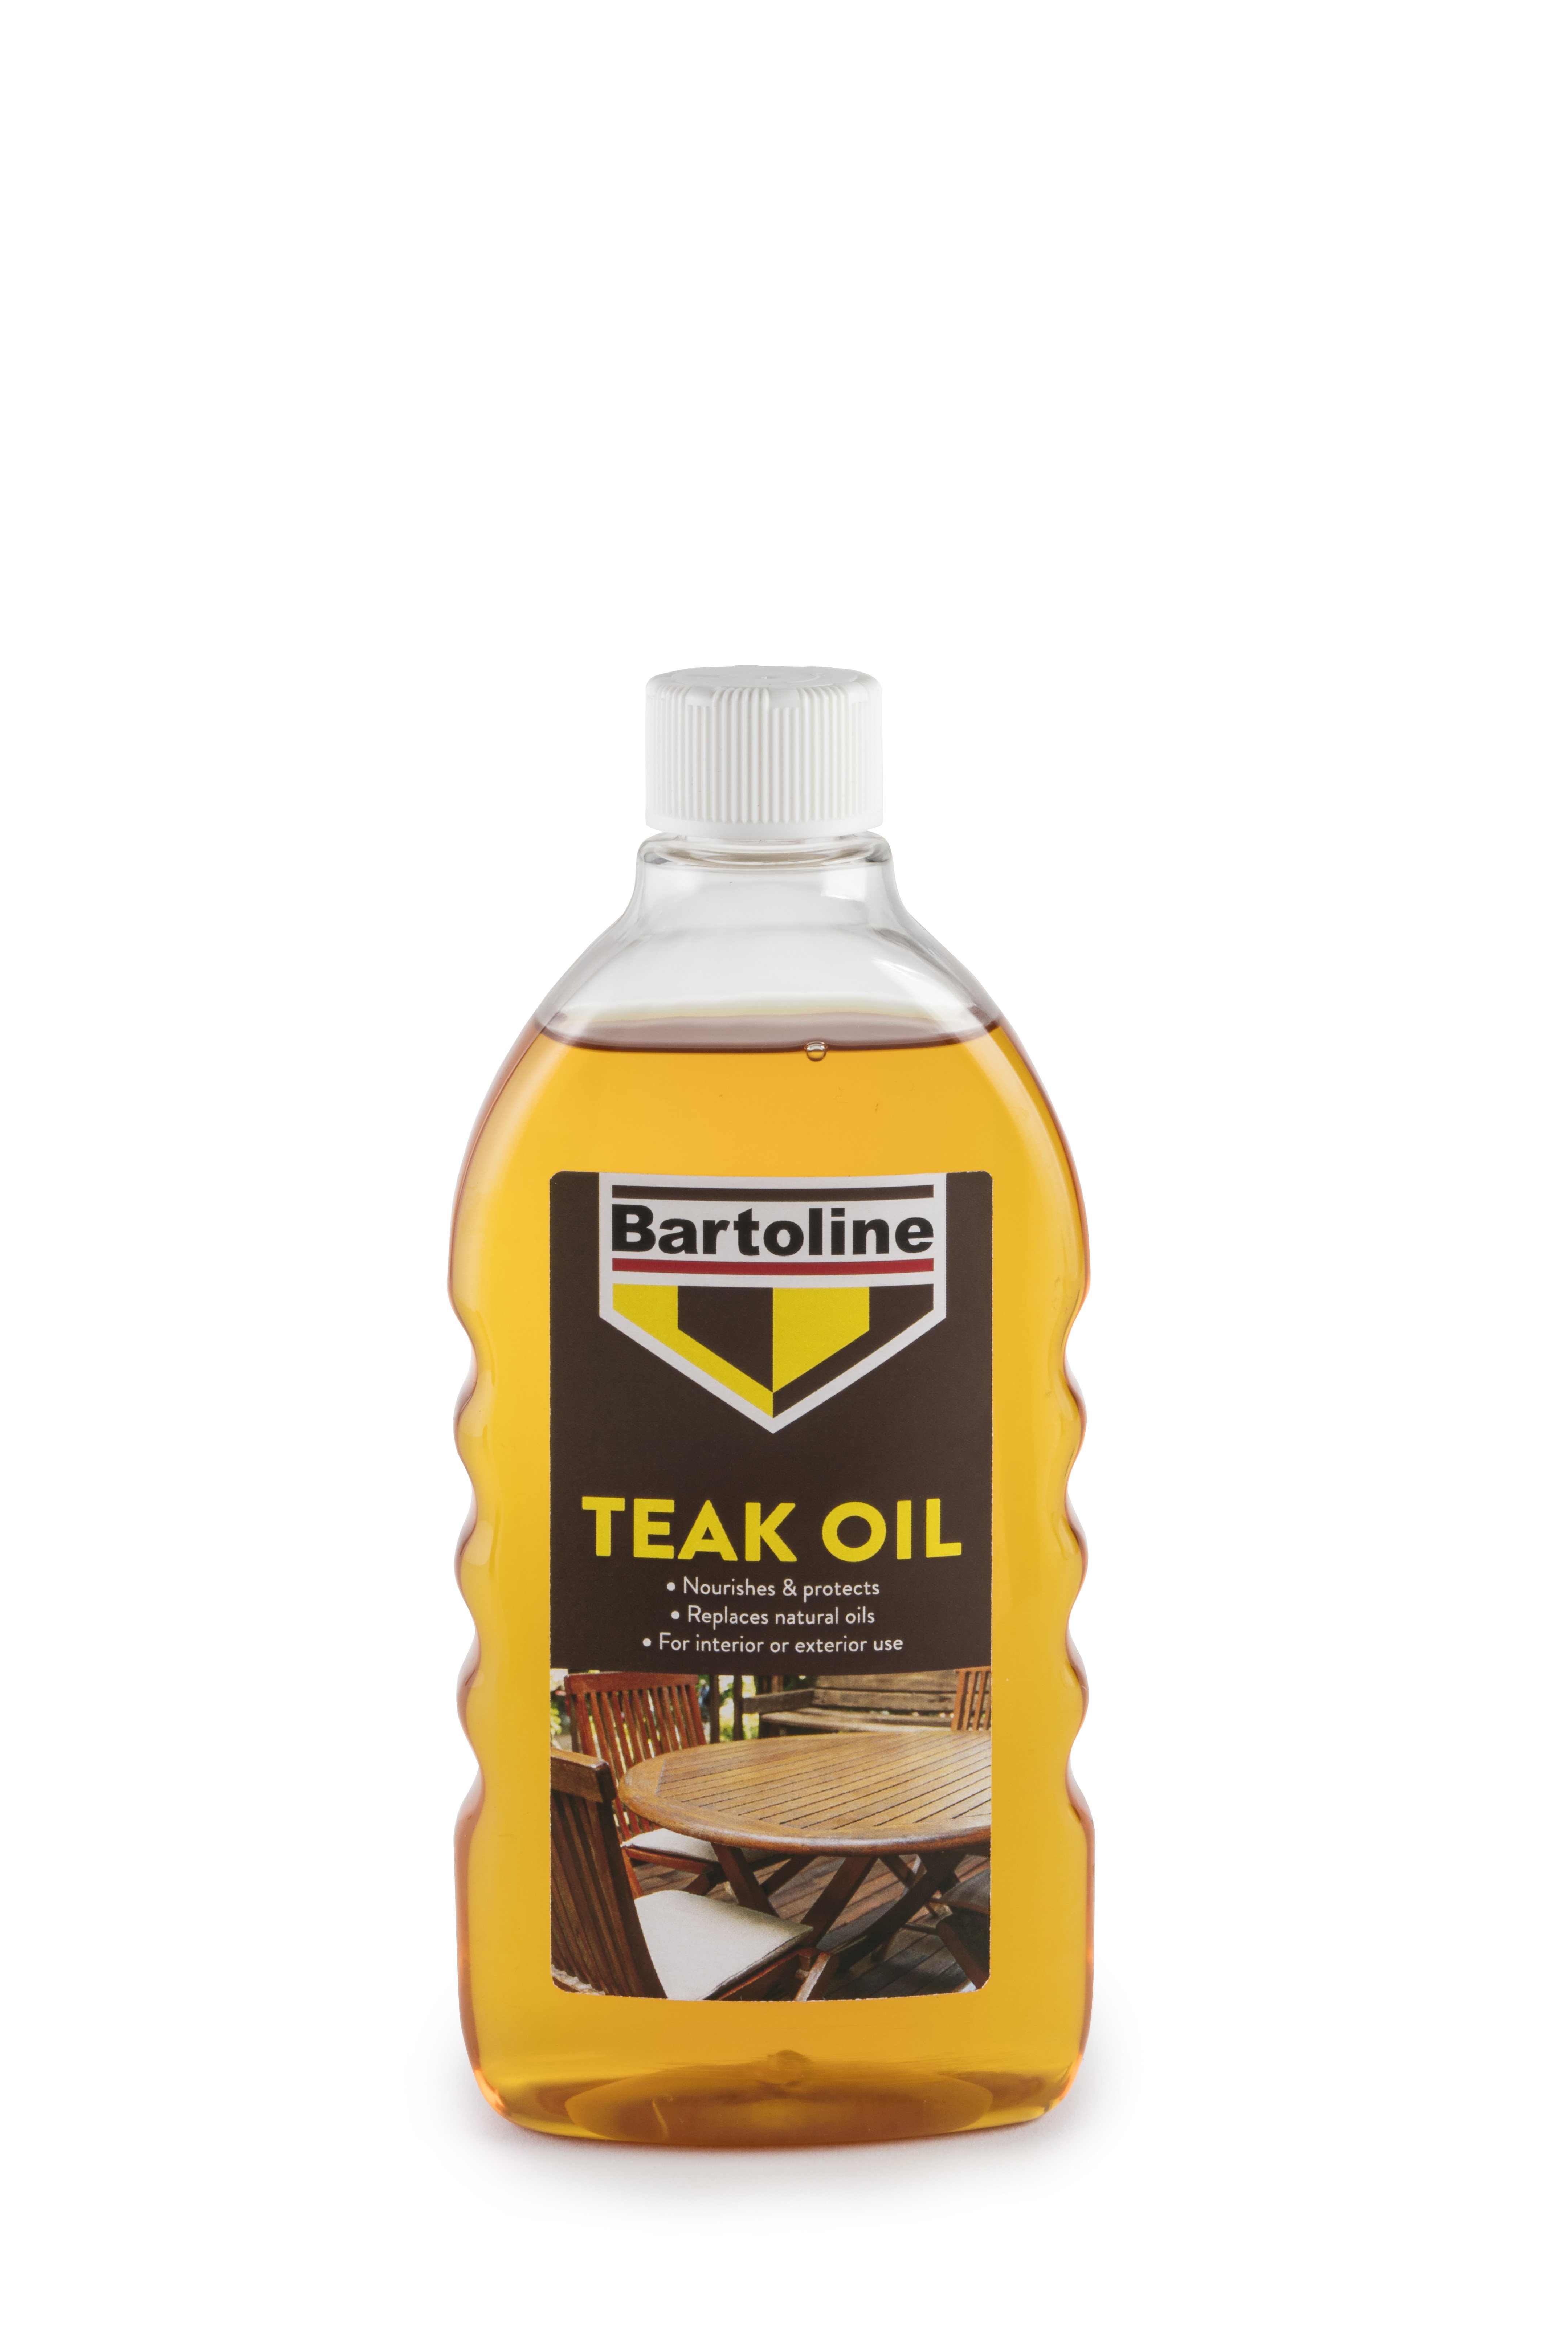 Bartoline 500ml Teak Oil